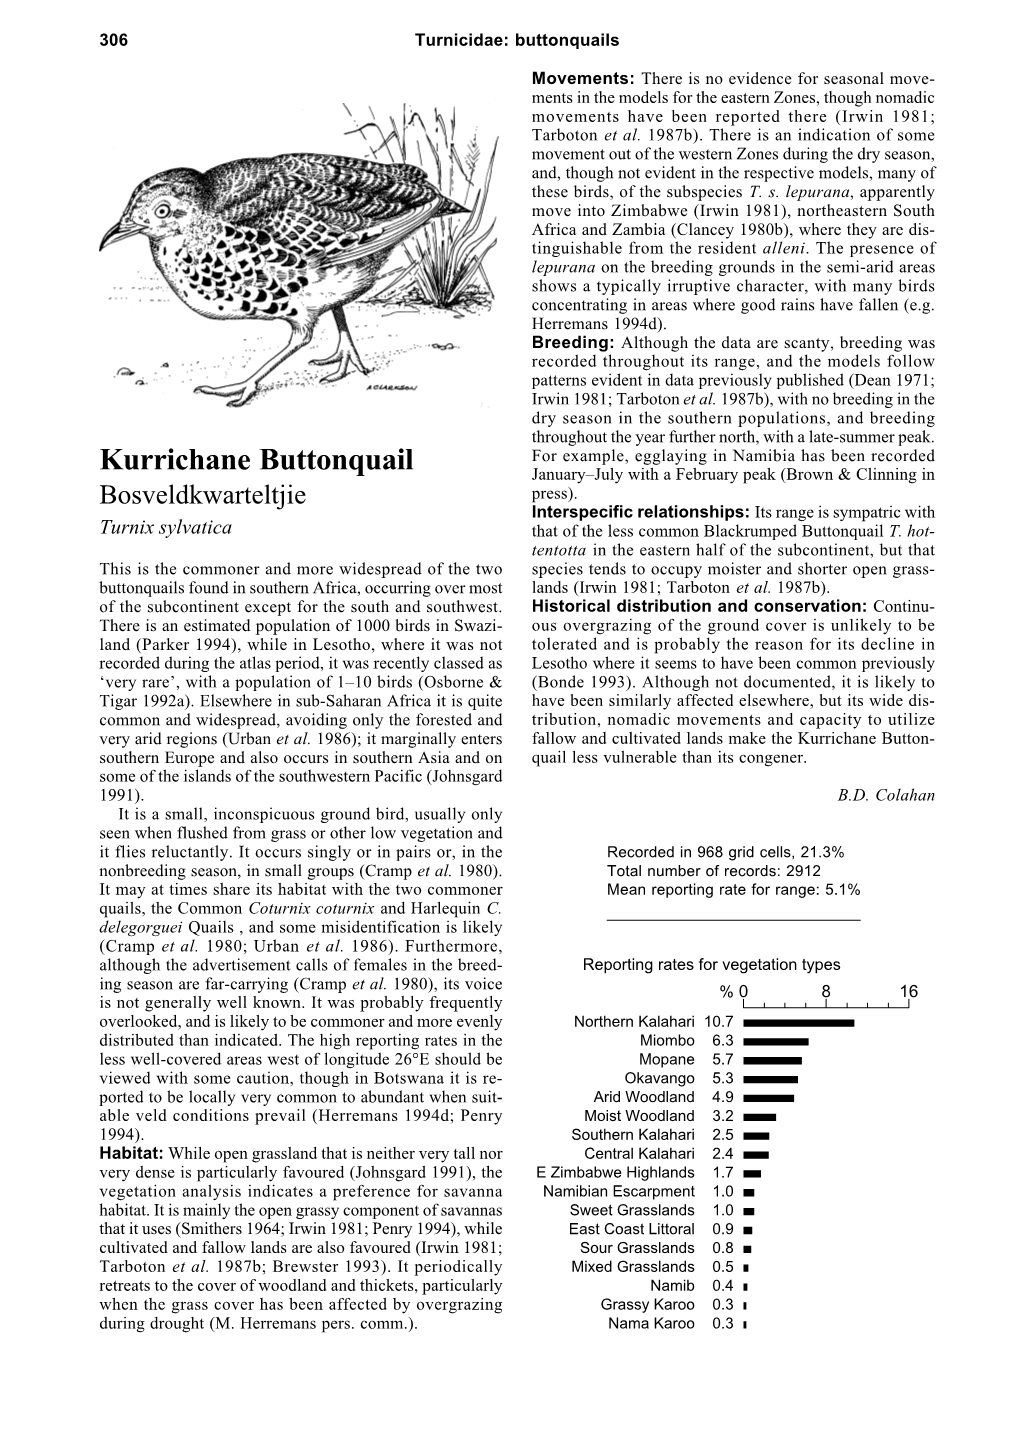 Kurrichane Buttonquail January–July with a February Peak (Brown & Clinning in Bosveldkwarteltjie Press)